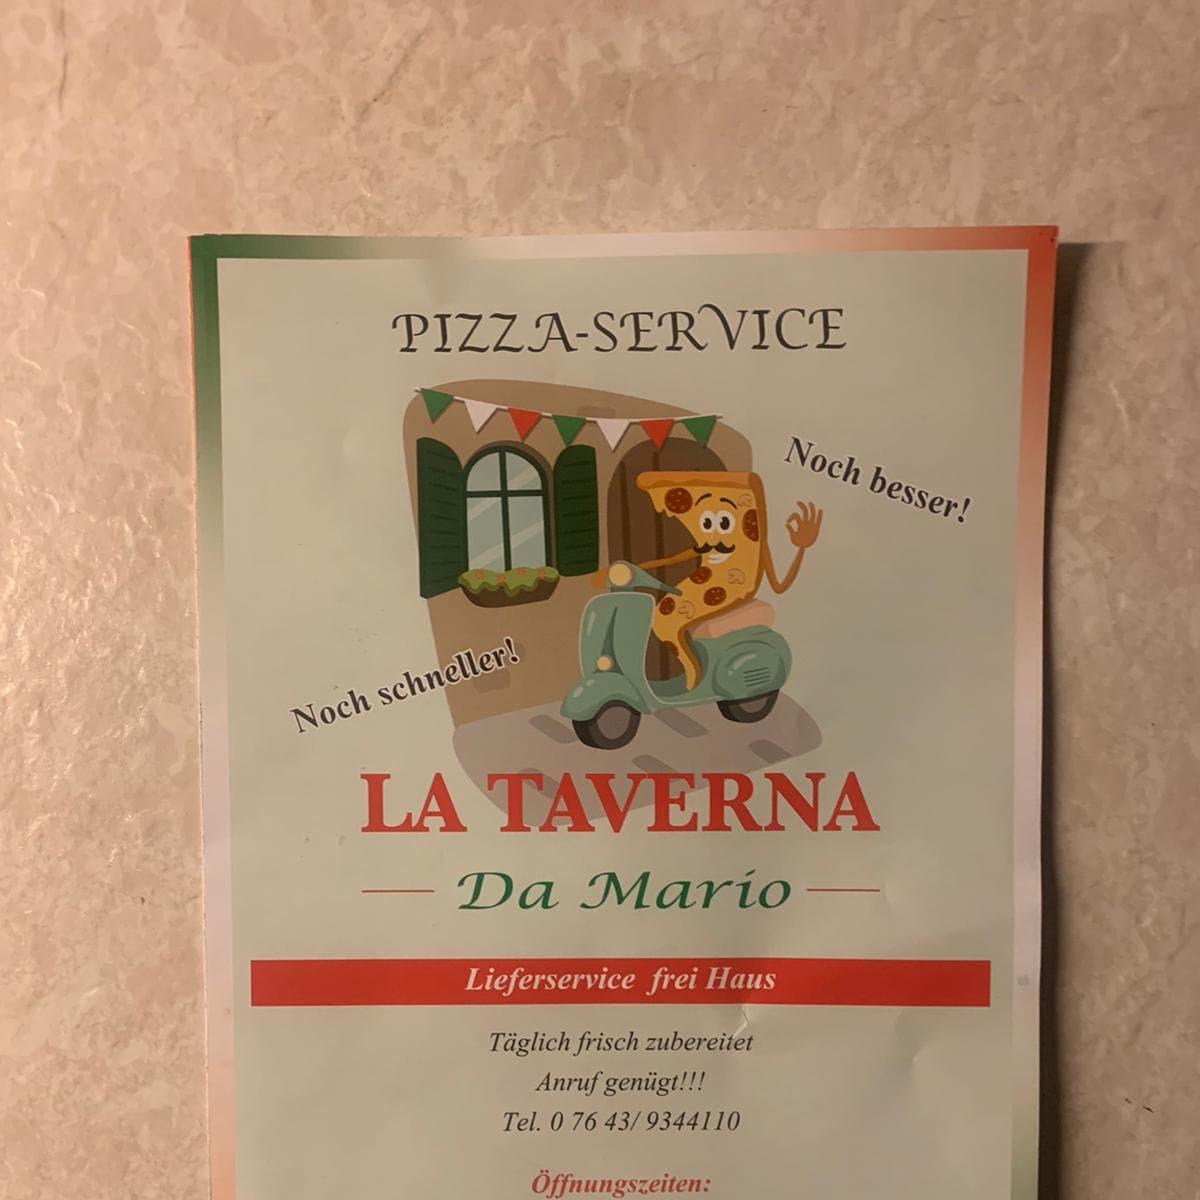 Restaurant "Pizza Service La Taverna" in Herbolzheim